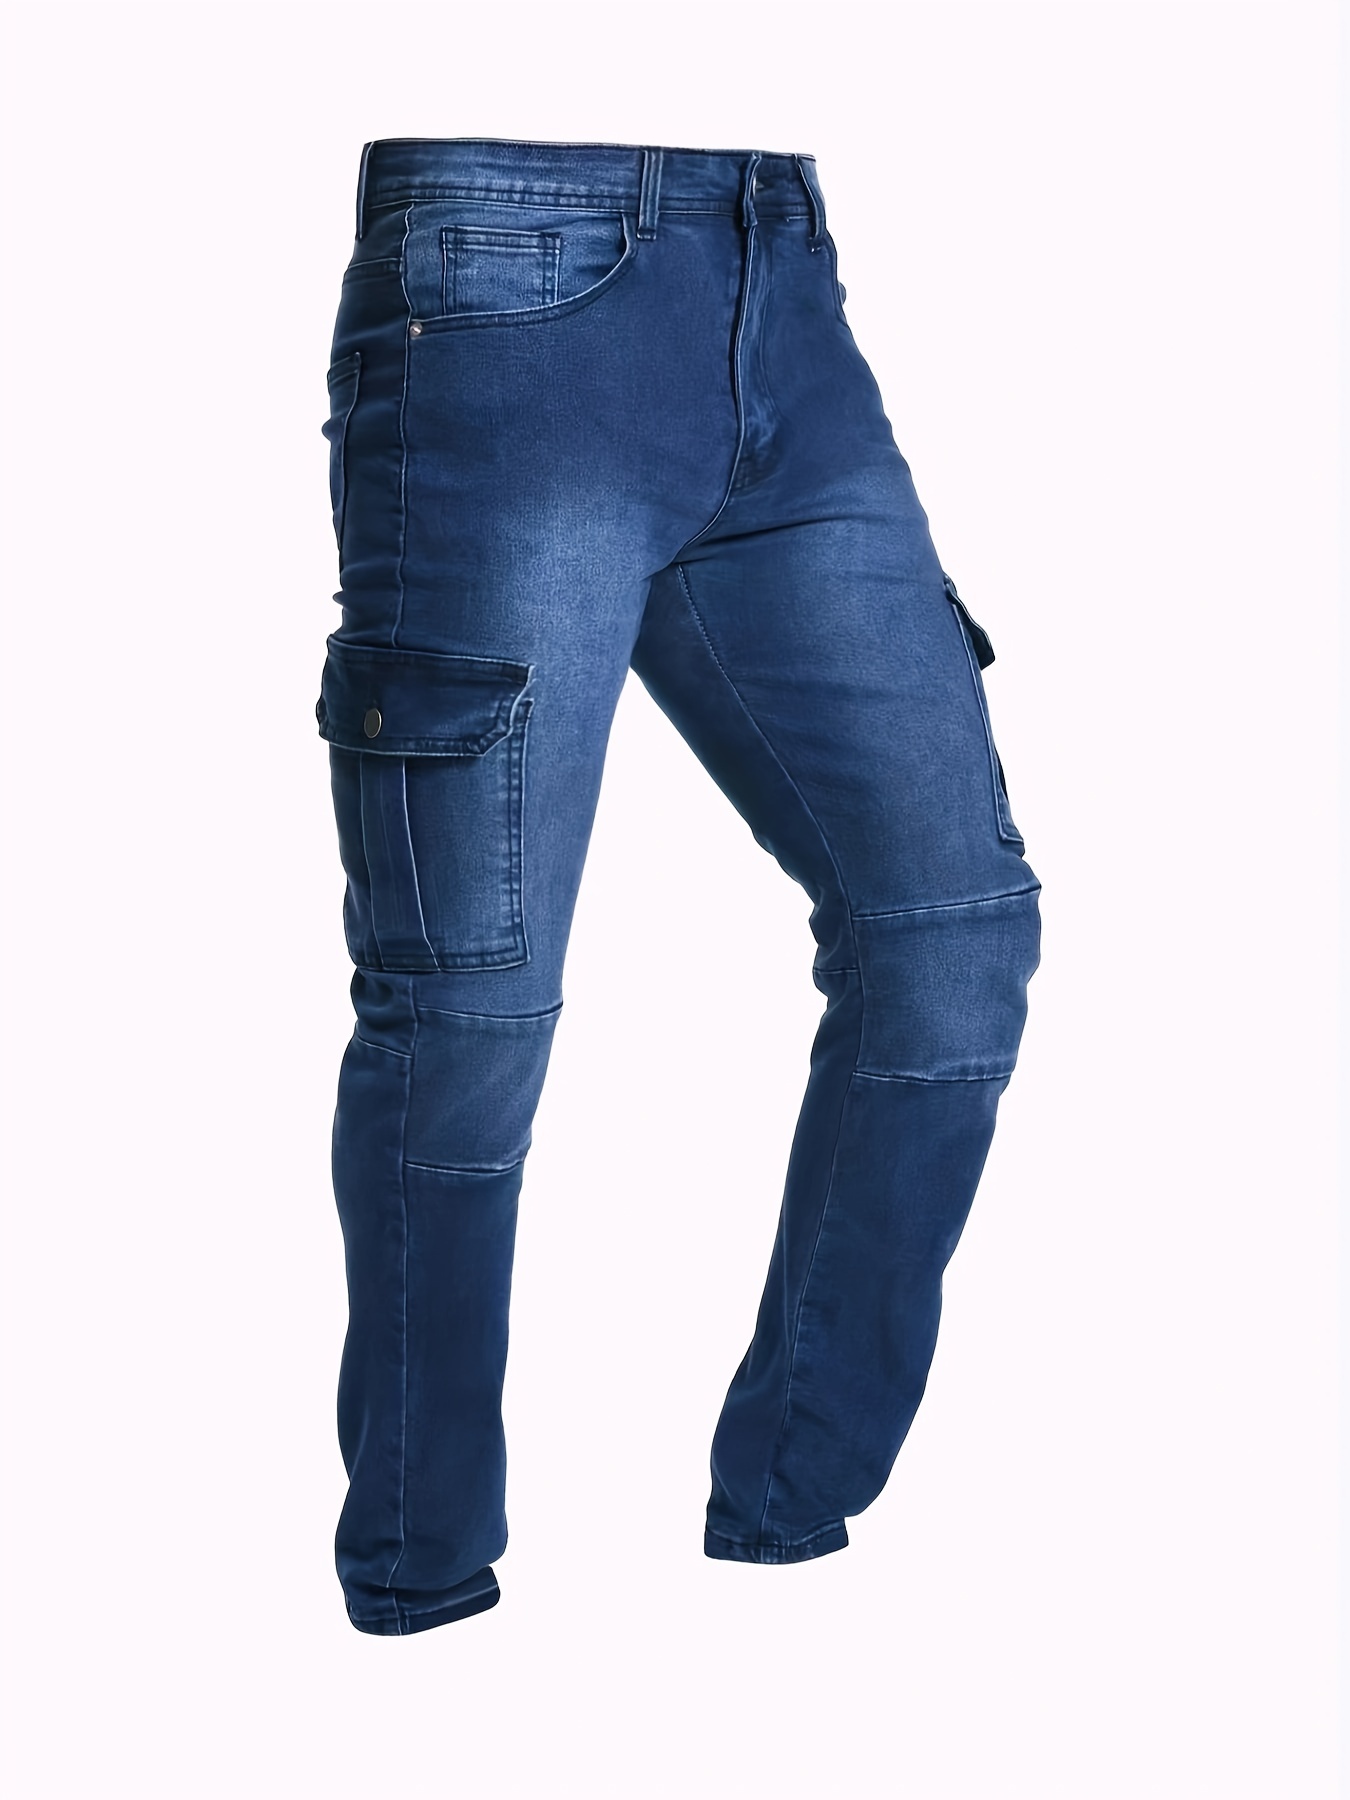 Men's Light Blue Cargo Jeans